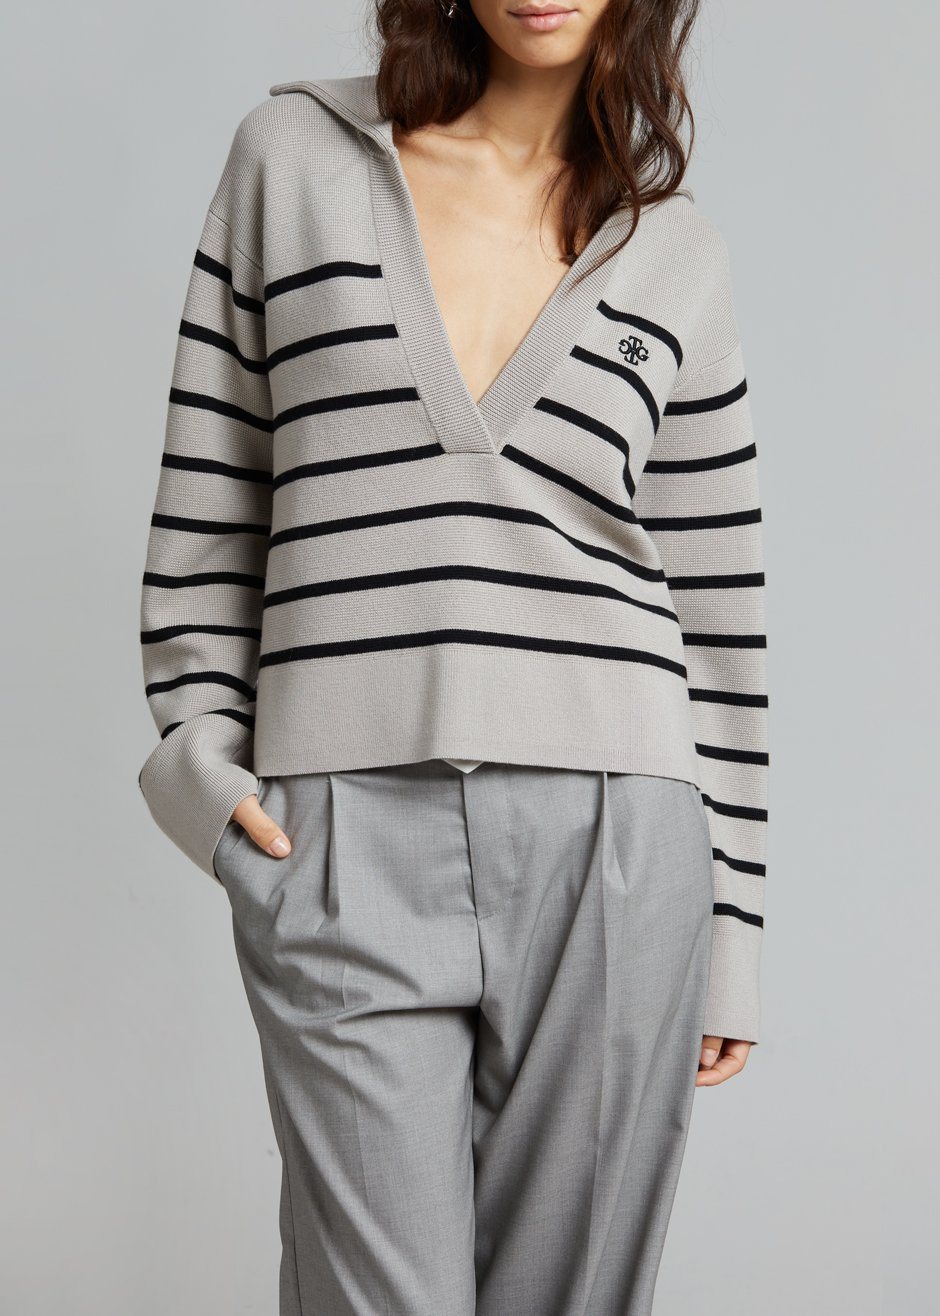 The Garment Marwari Sweater - Ecru/Black Stripe - 1